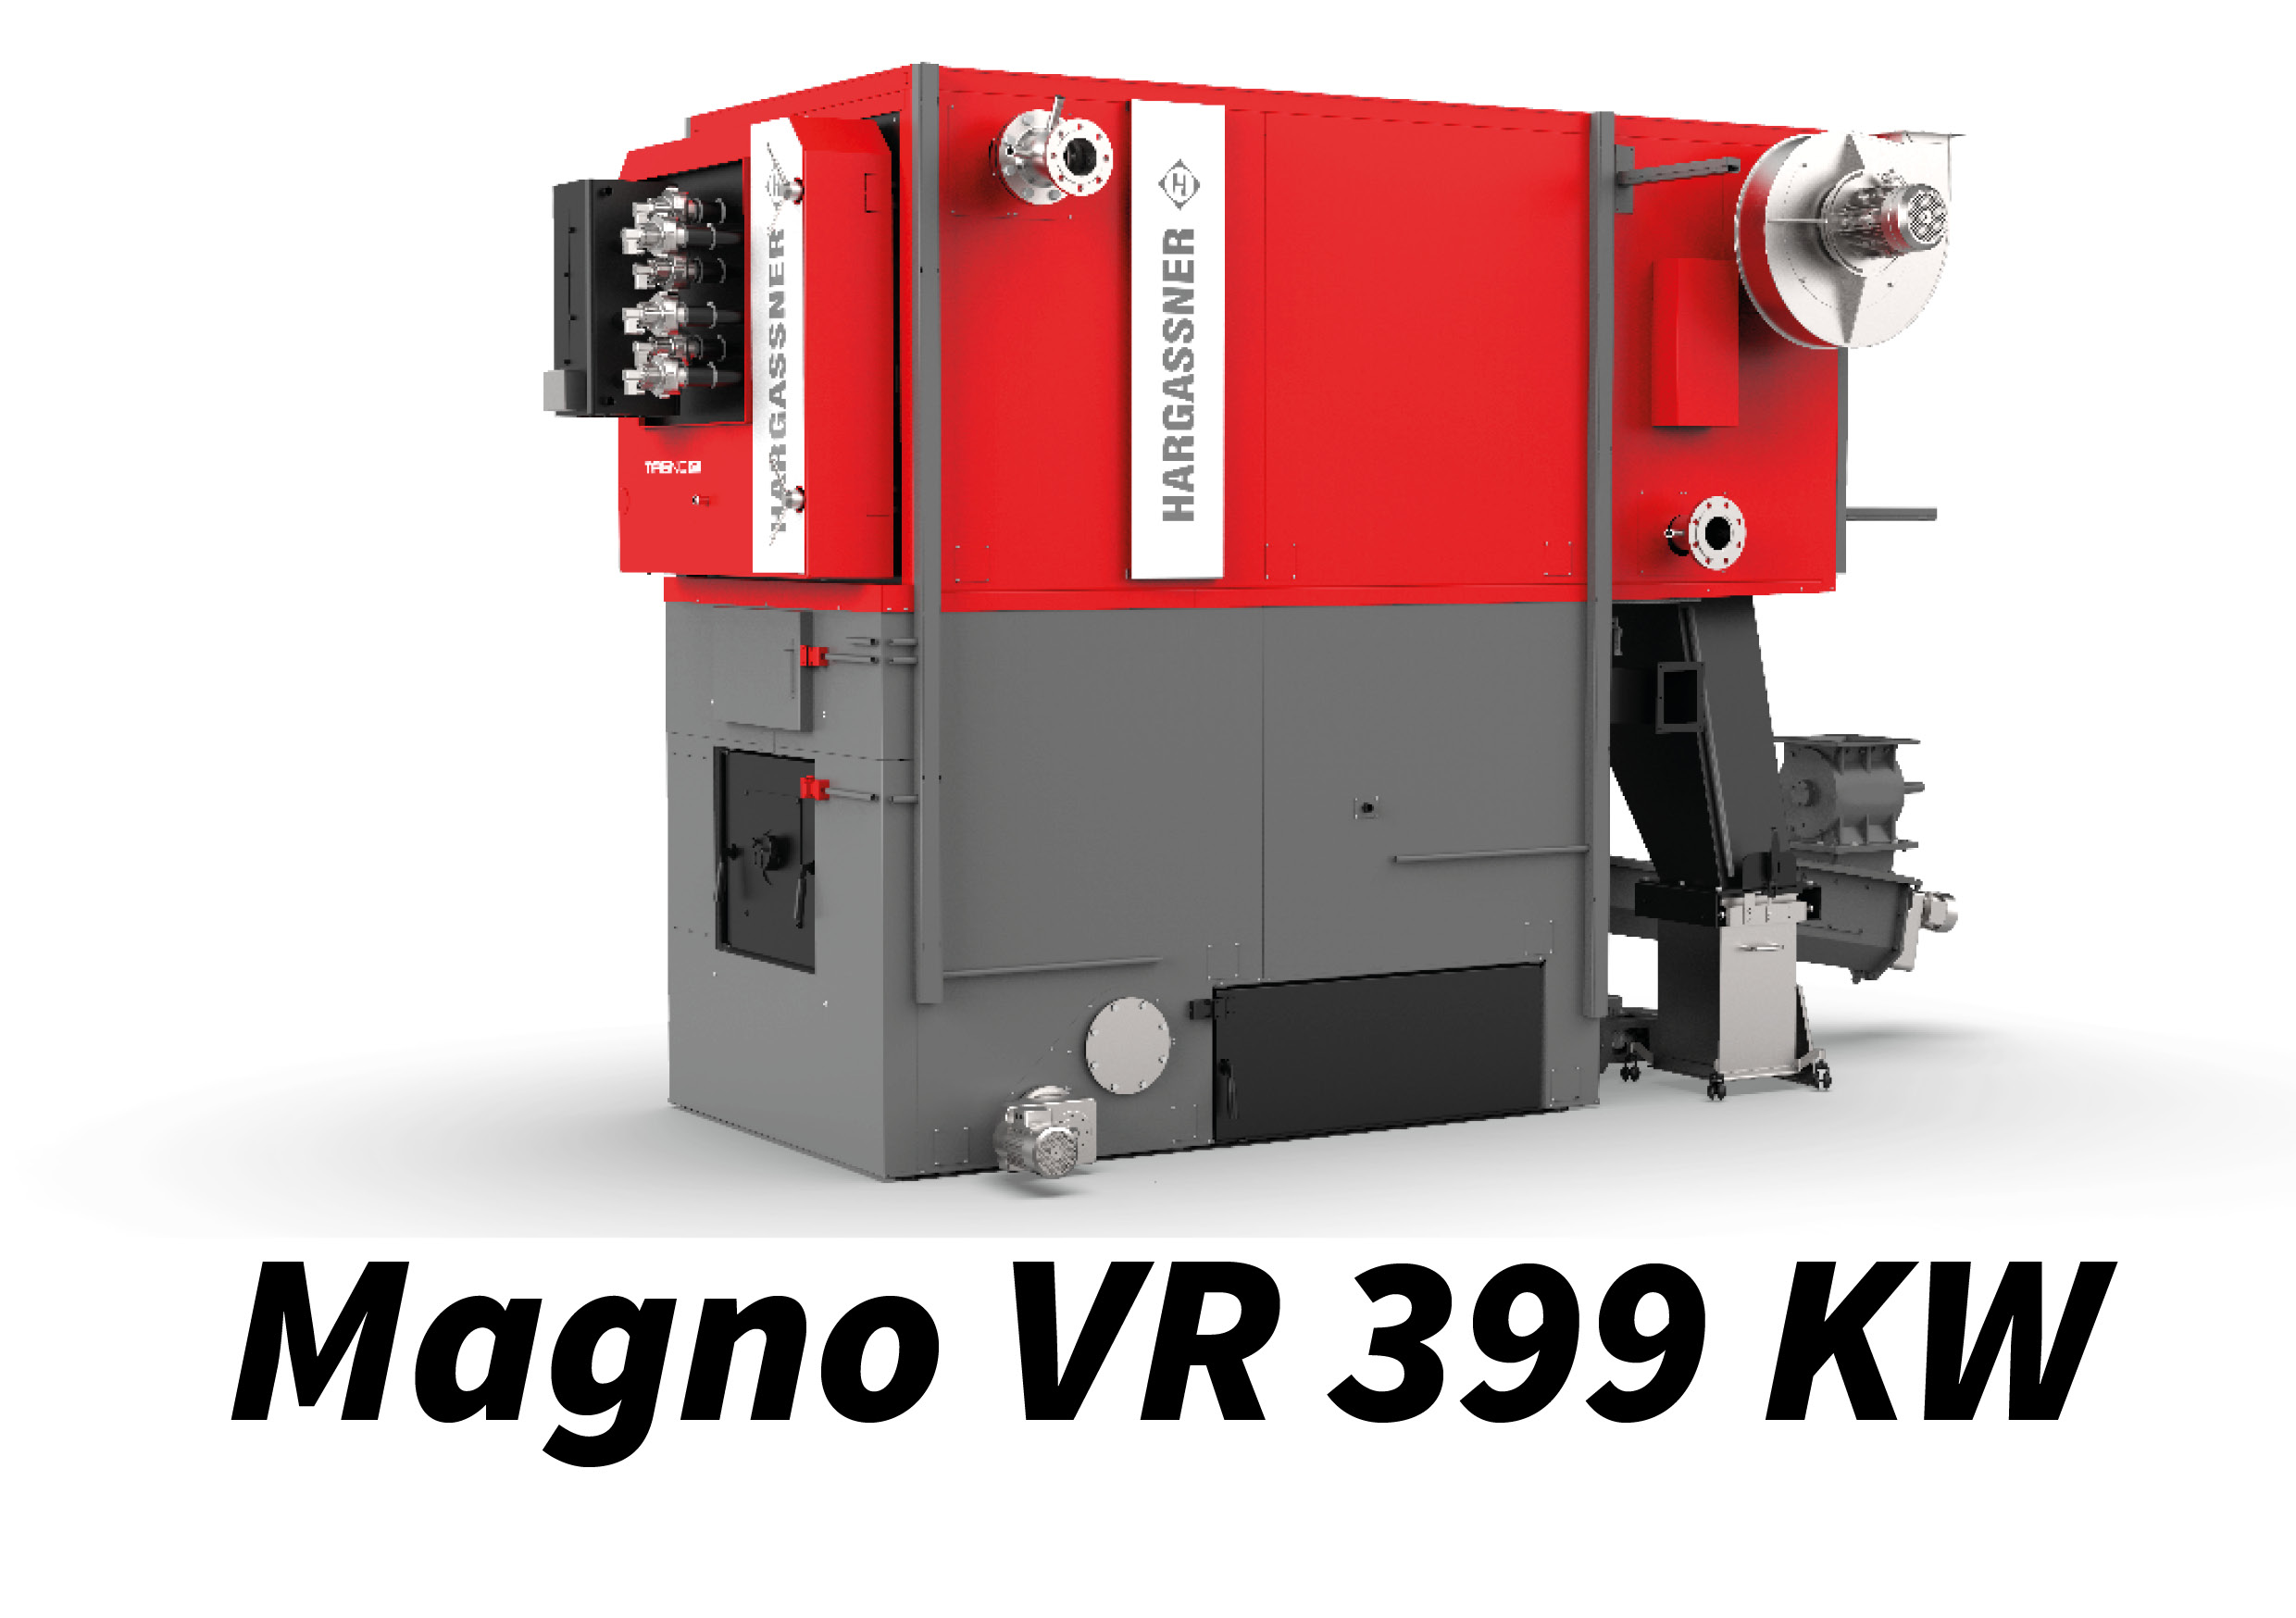 Magno VR 399 kW